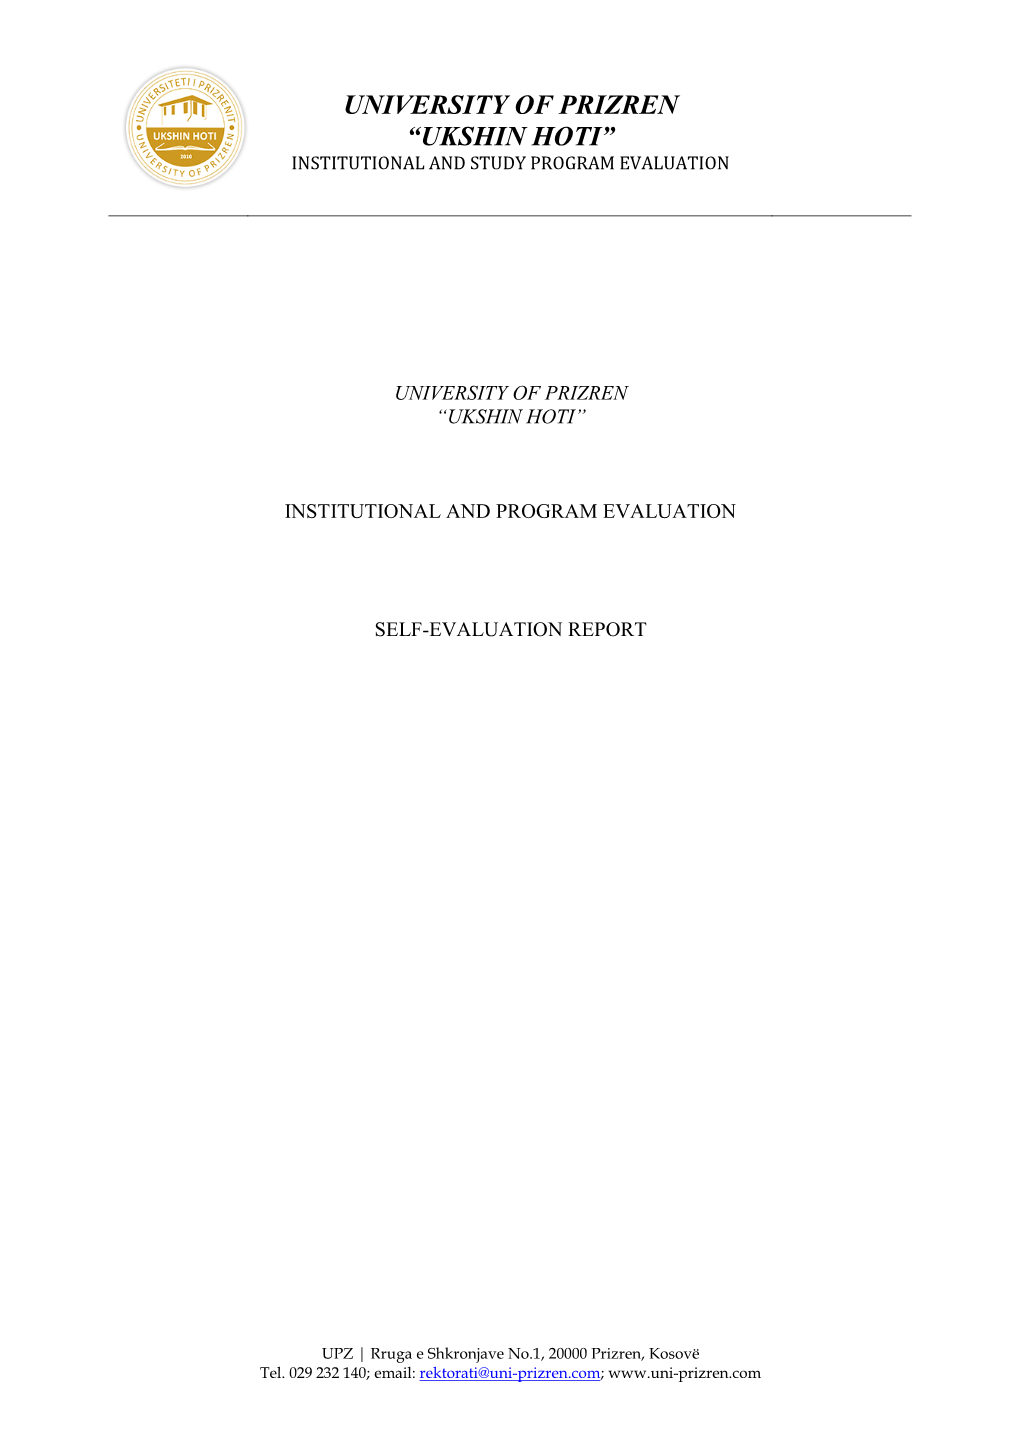 University of Prizren “Ukshin Hoti” Institutional and Study Program Evaluation